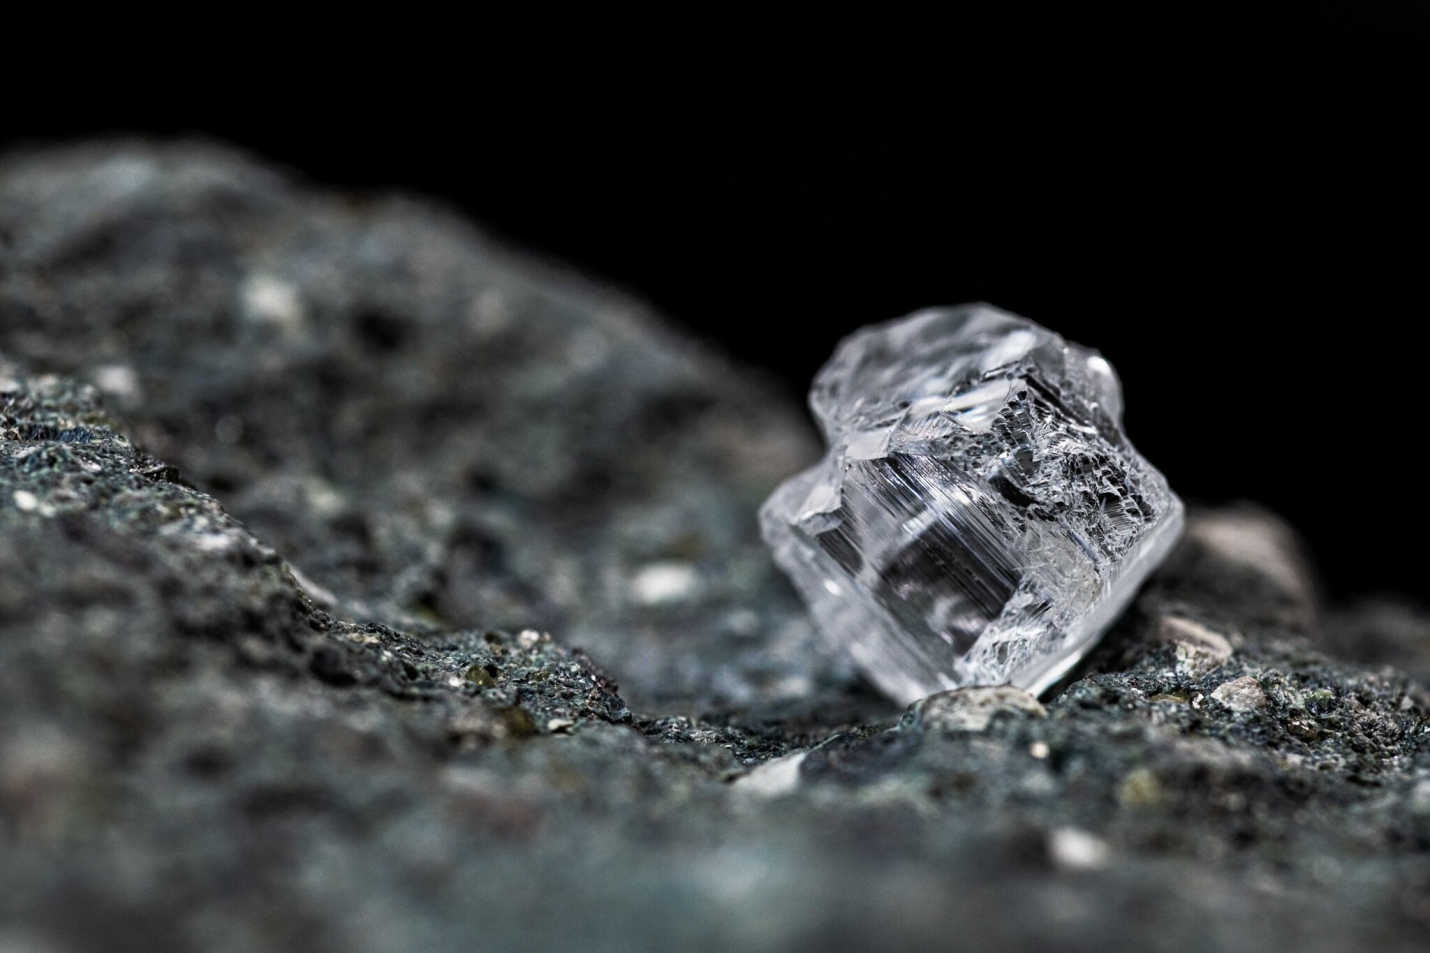 GJEPC took steps to address diamond industry crisis UPSC